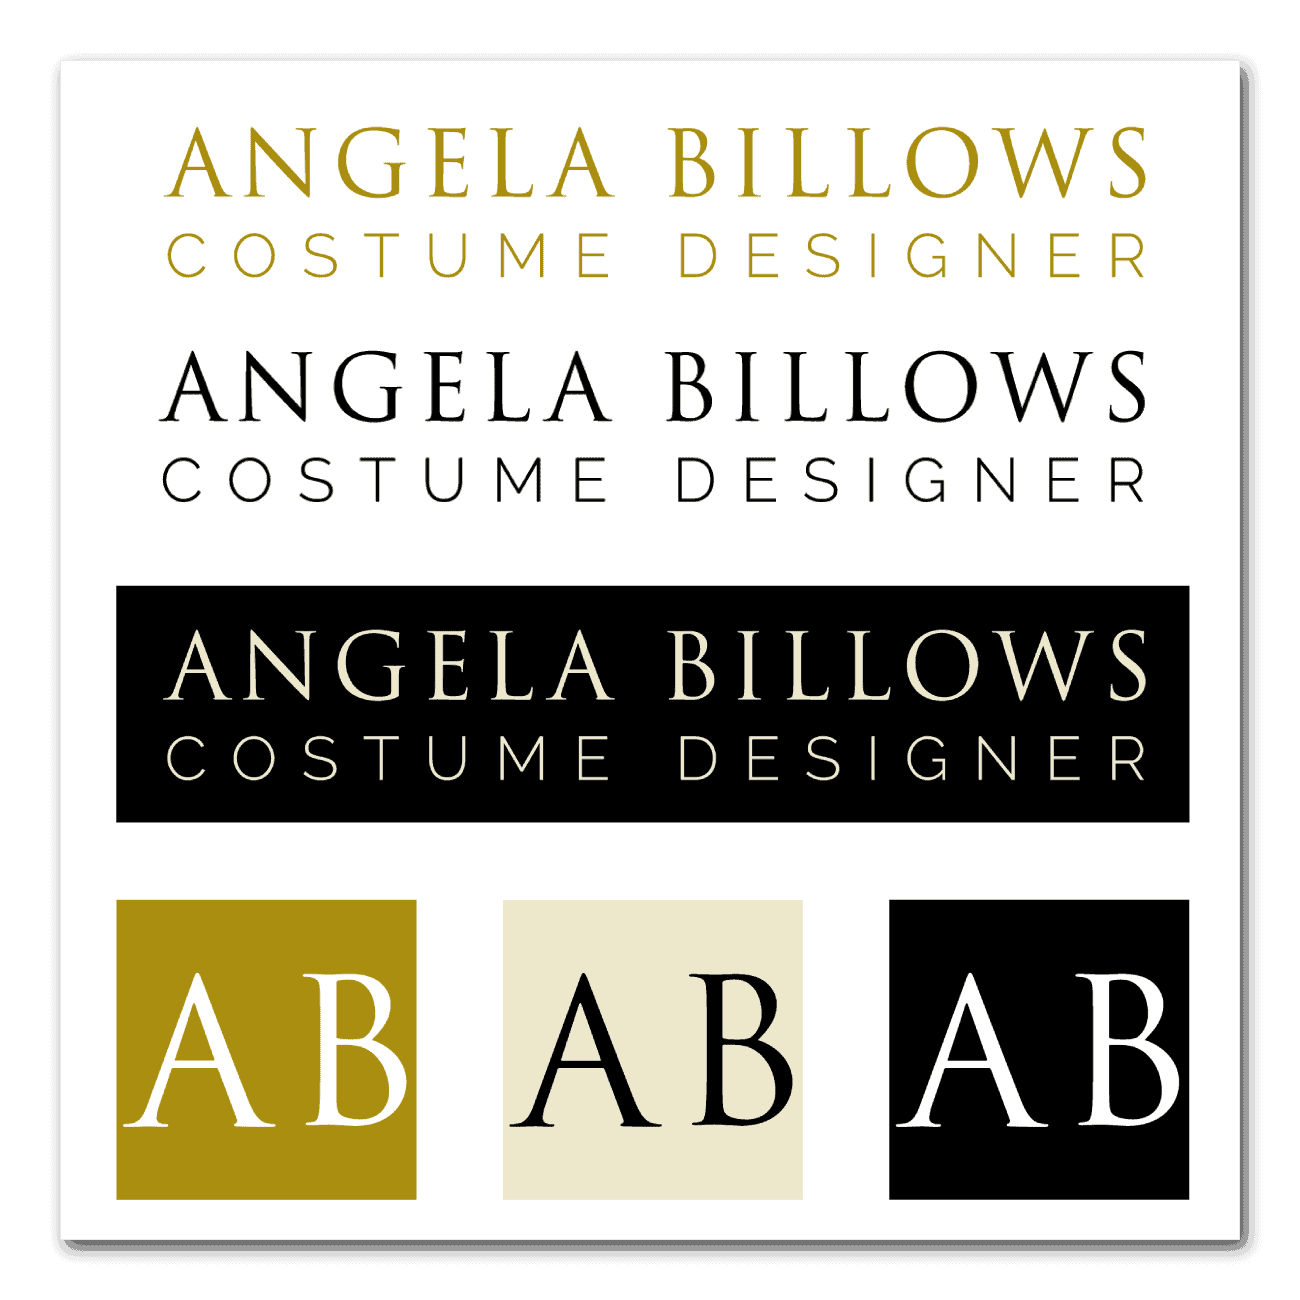 Angela Billows logo design